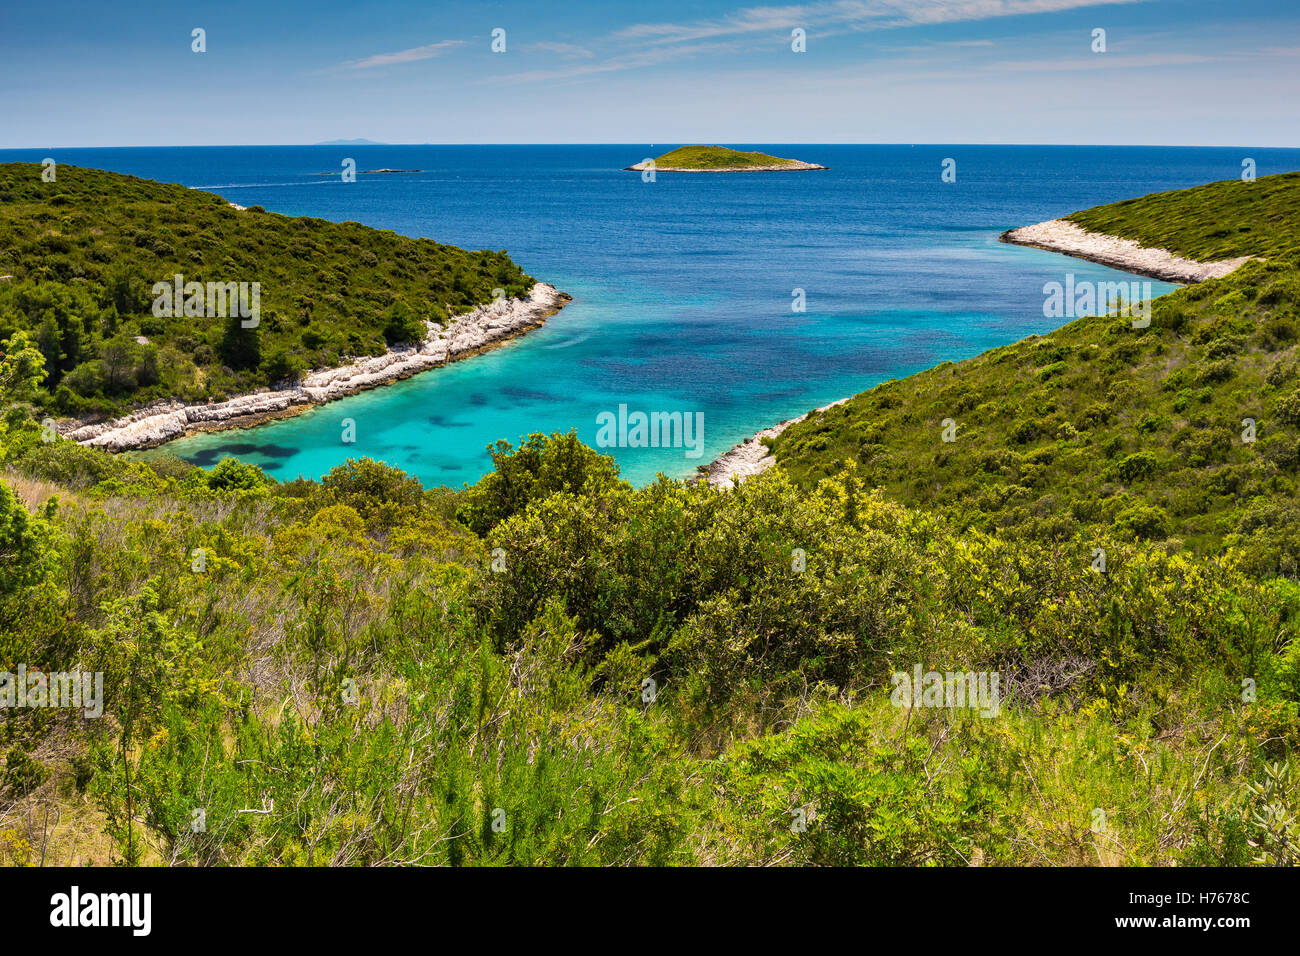 Pakleni-Inseln. Paklinski otoci. Bucht und mediterrane Vegetation. Adria. Kroatien. Europa. Stockfoto